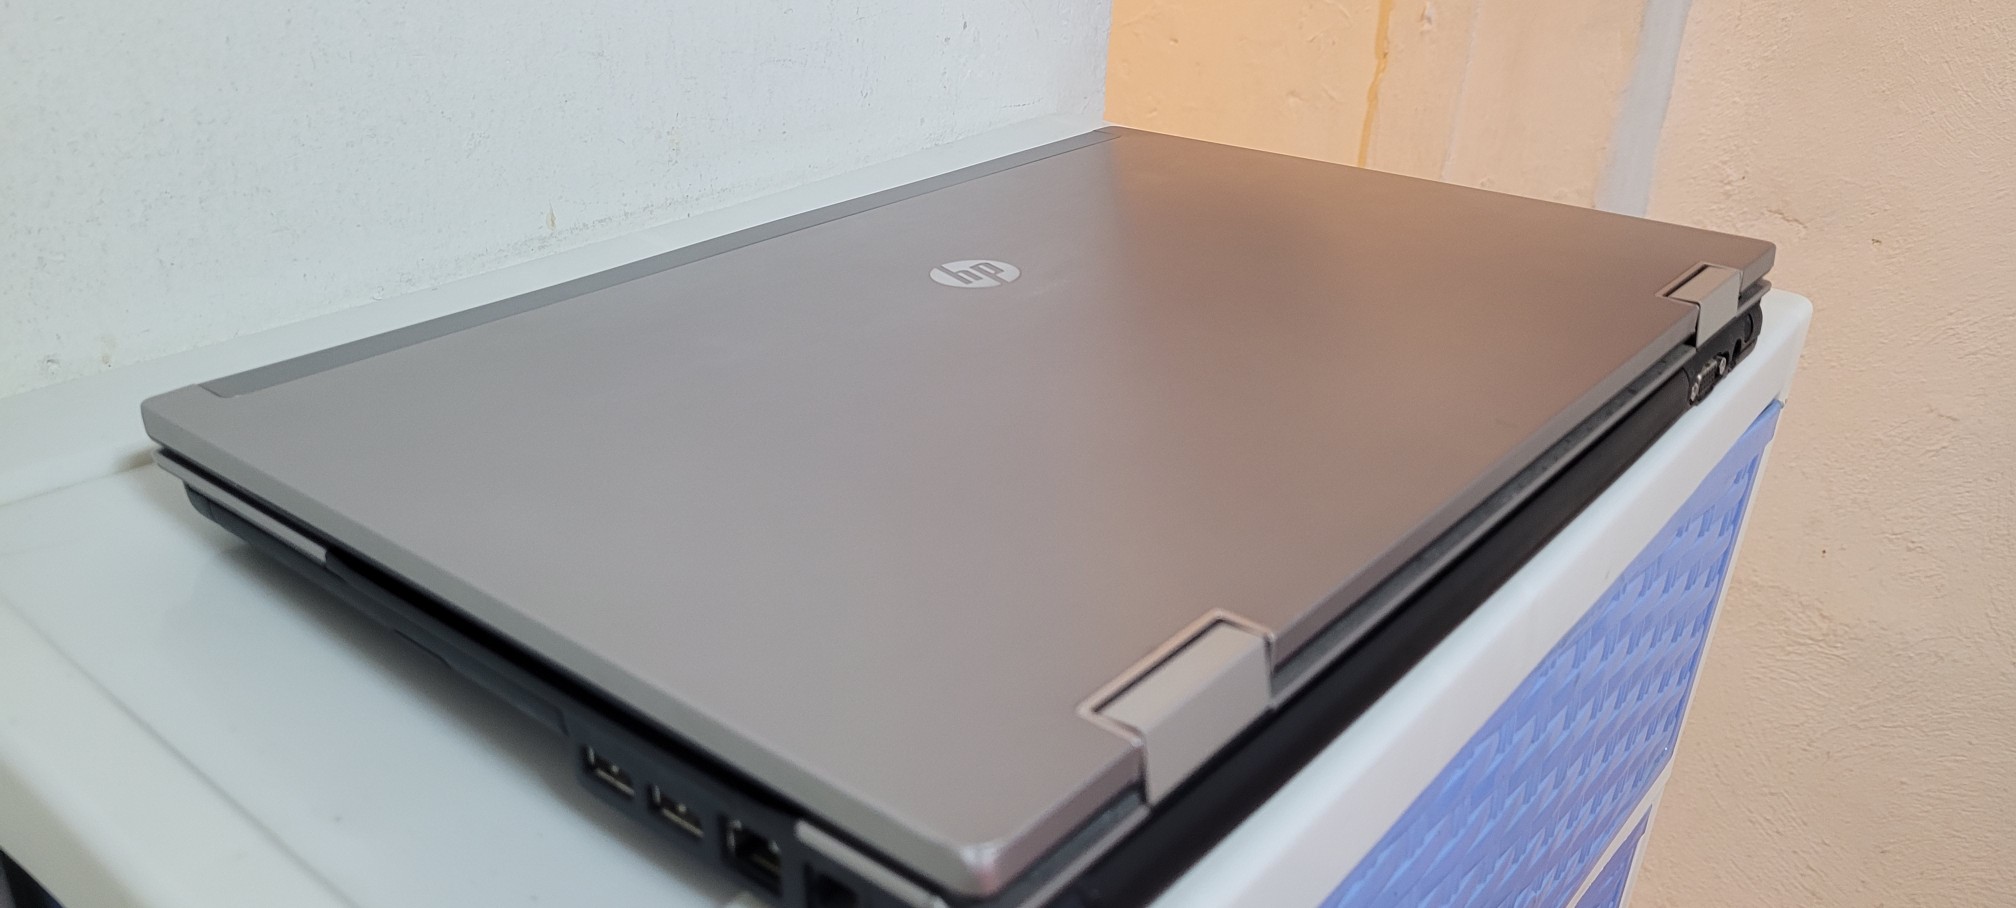 computadoras y laptops - Laptop hp 17 Pulg Core i7 Ram 8gb Disco SSD 128GB Nvidea 4gb Disponible 2